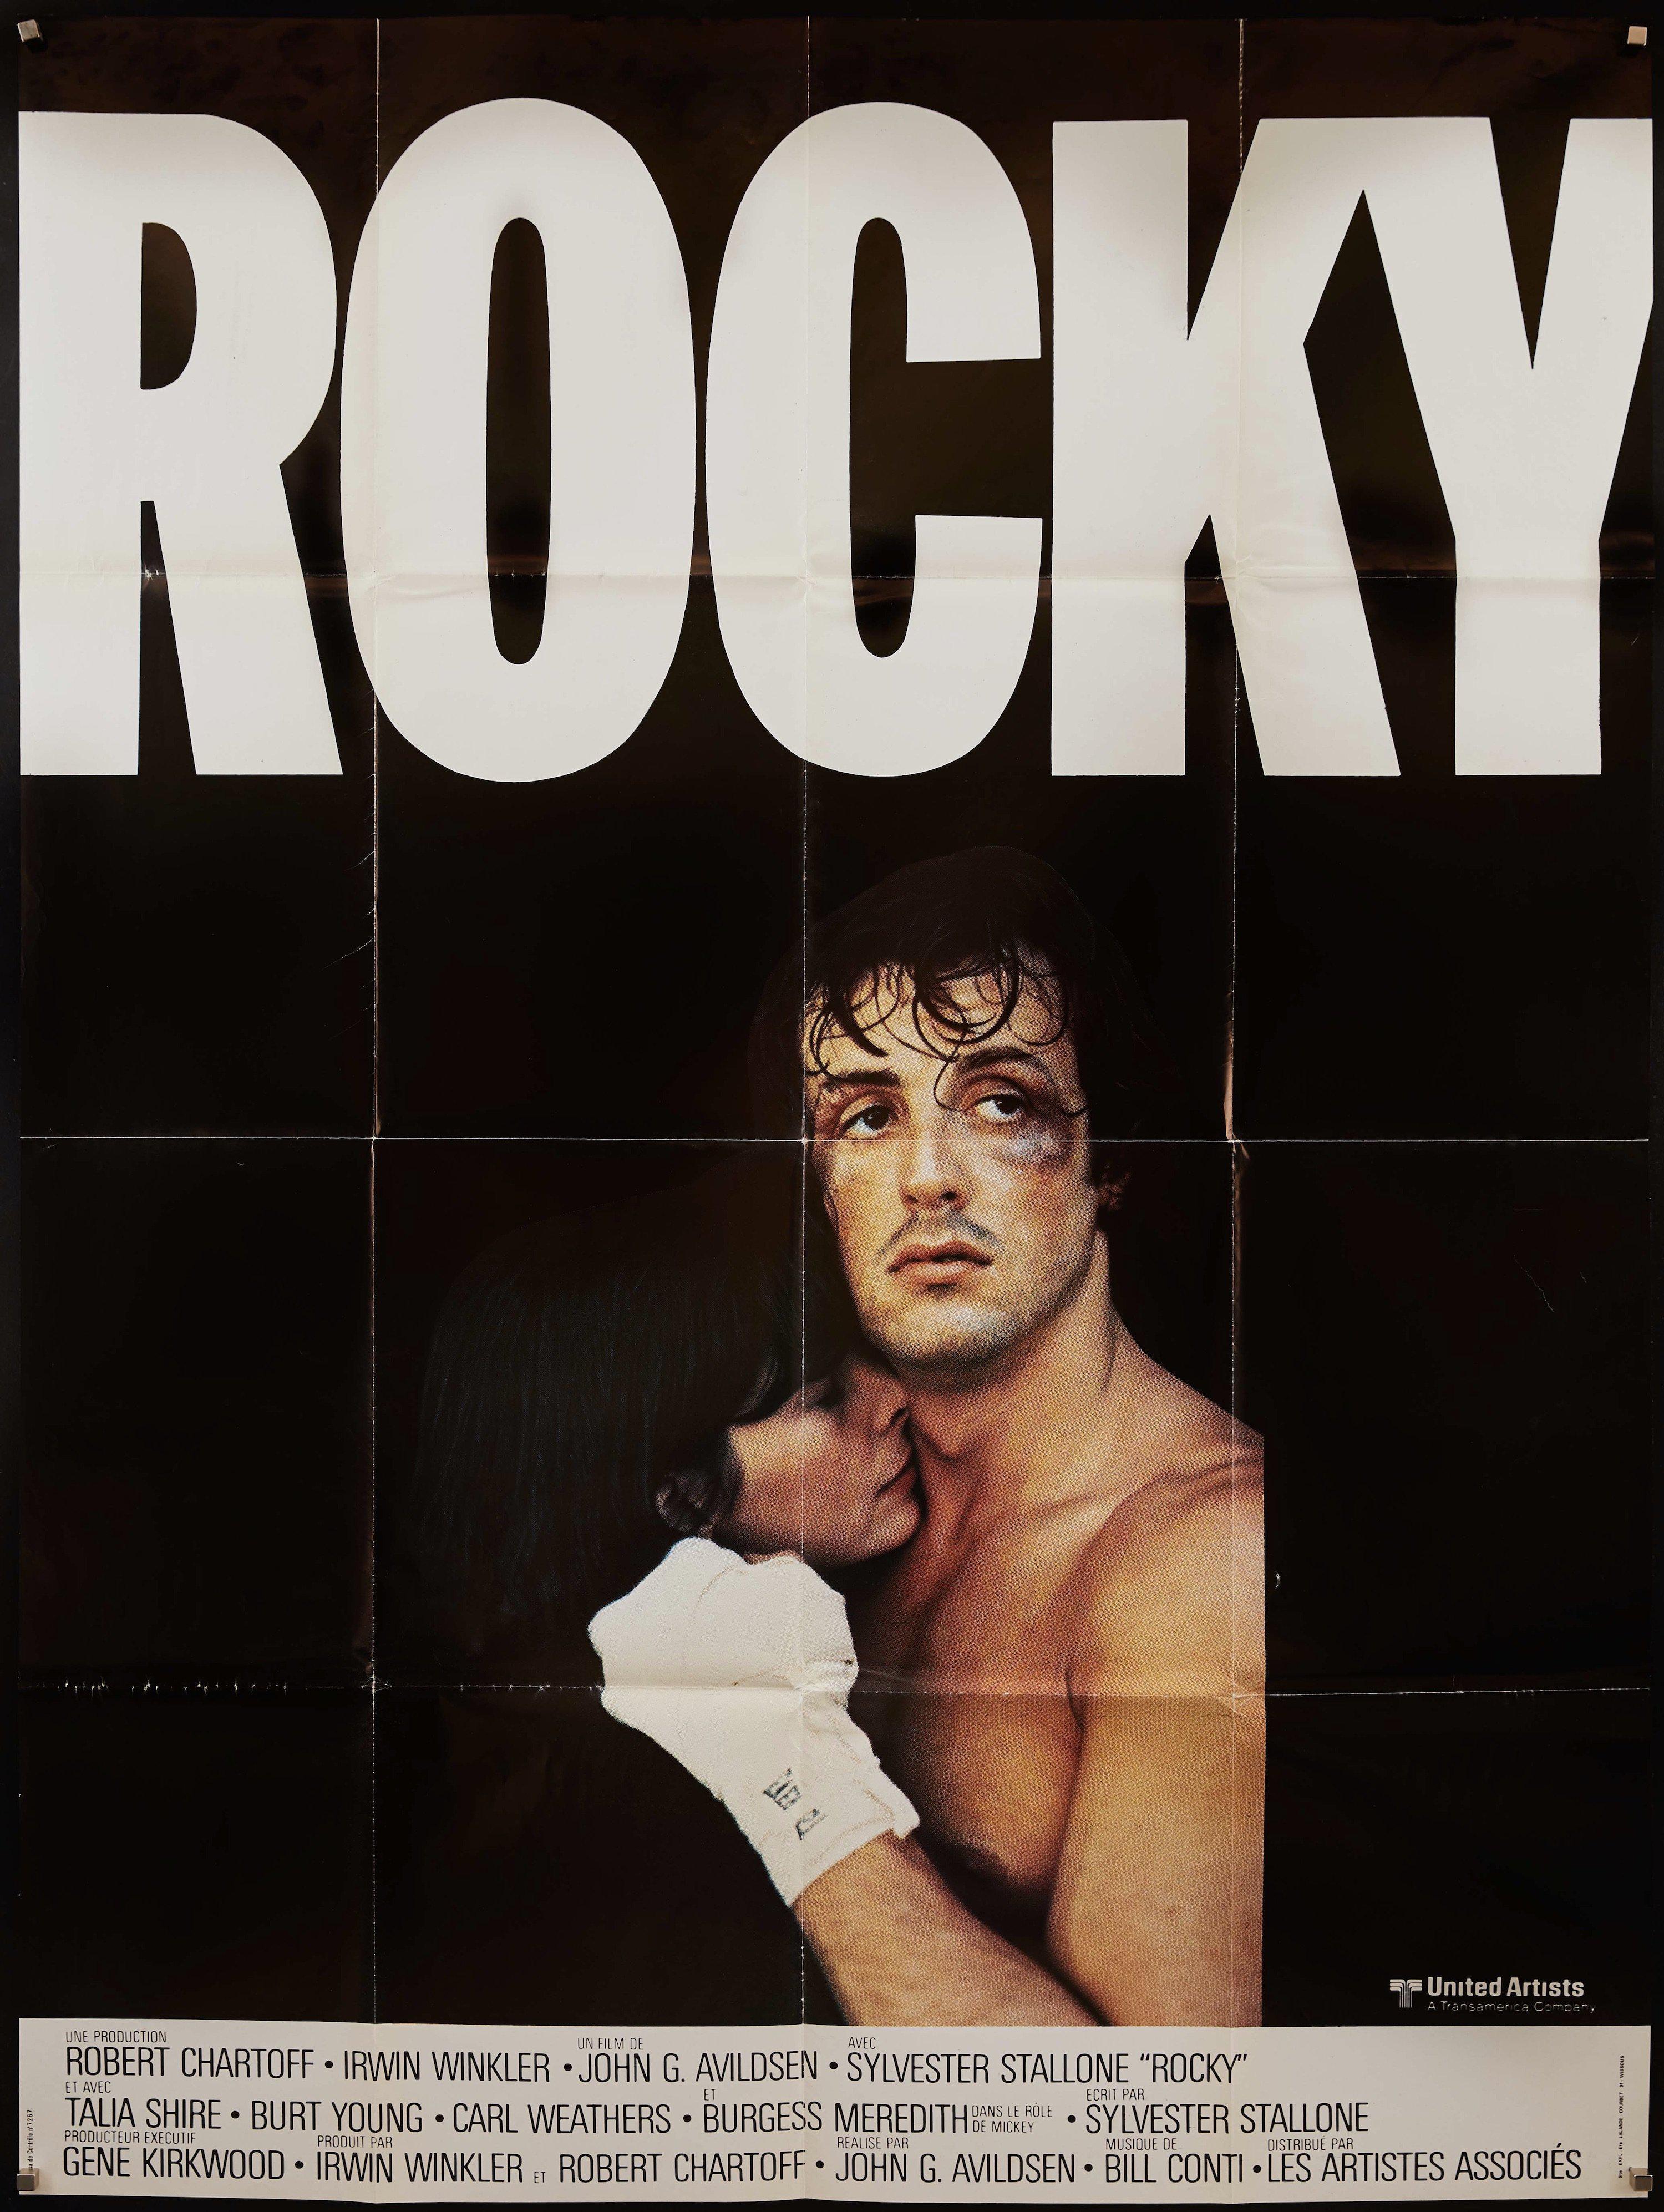 rocky movie poster 1976